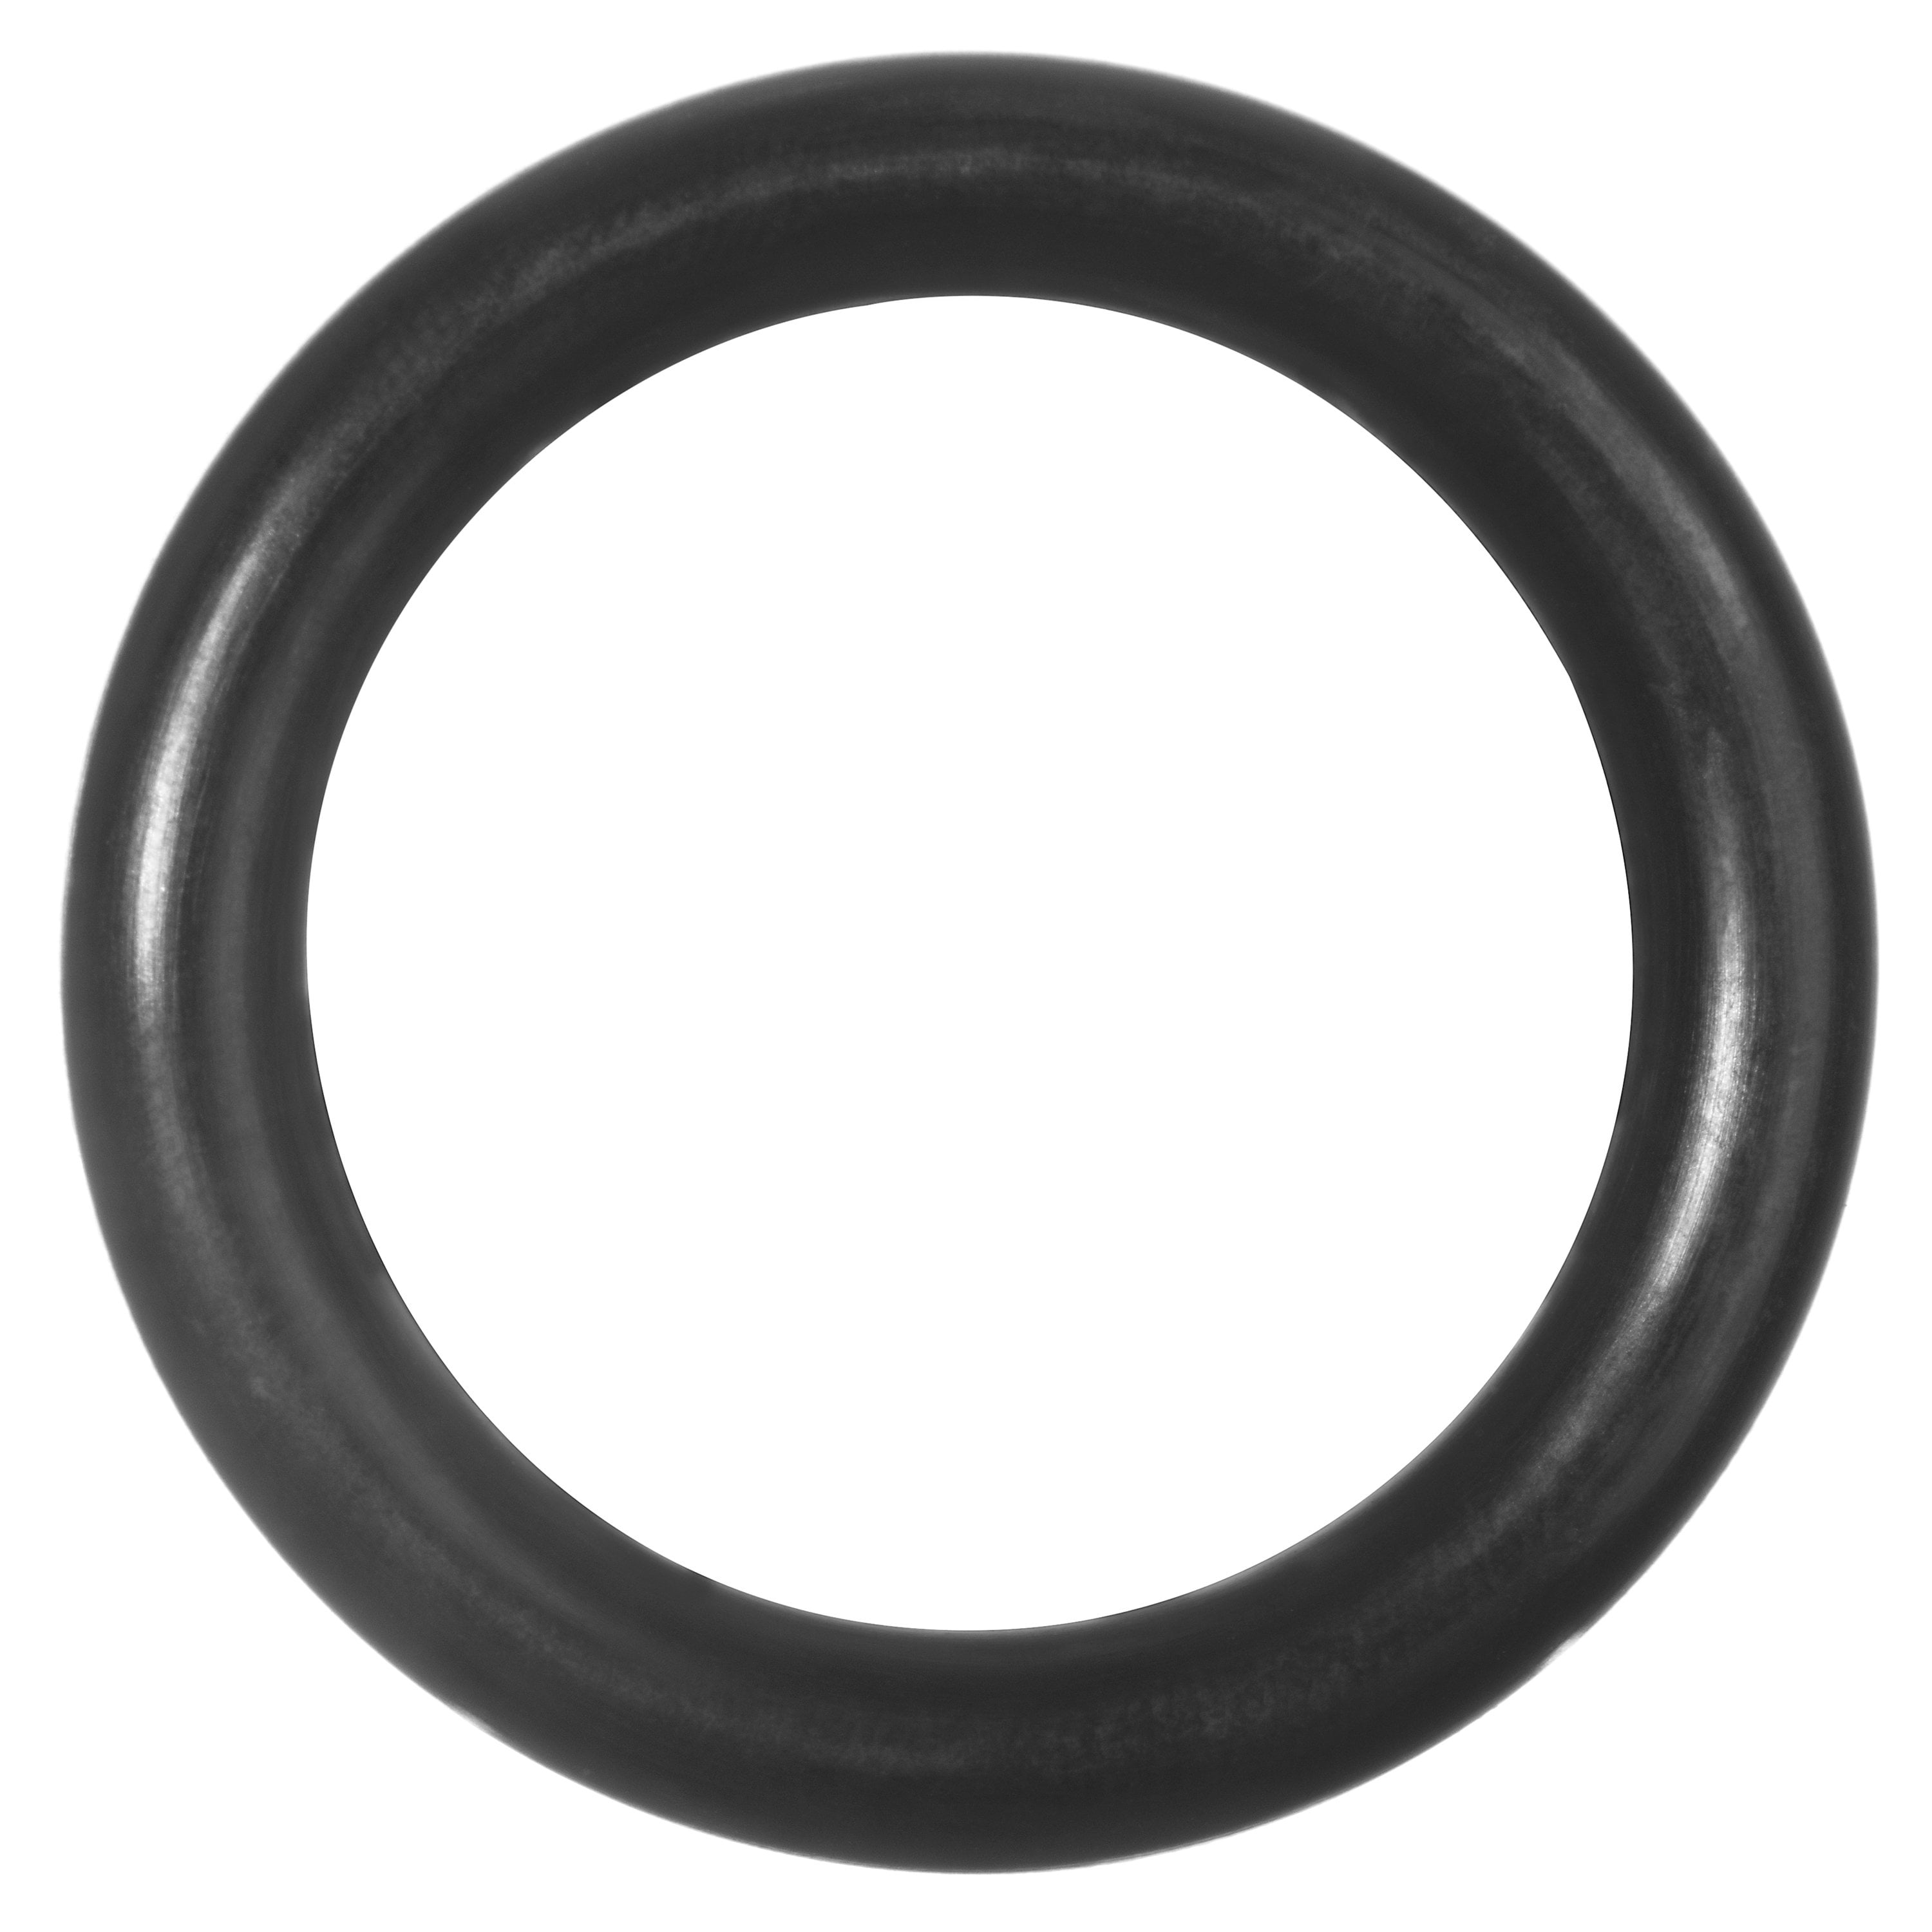 Metric Buna  O-rings 48 x 1mm  Price for 5 pcs 